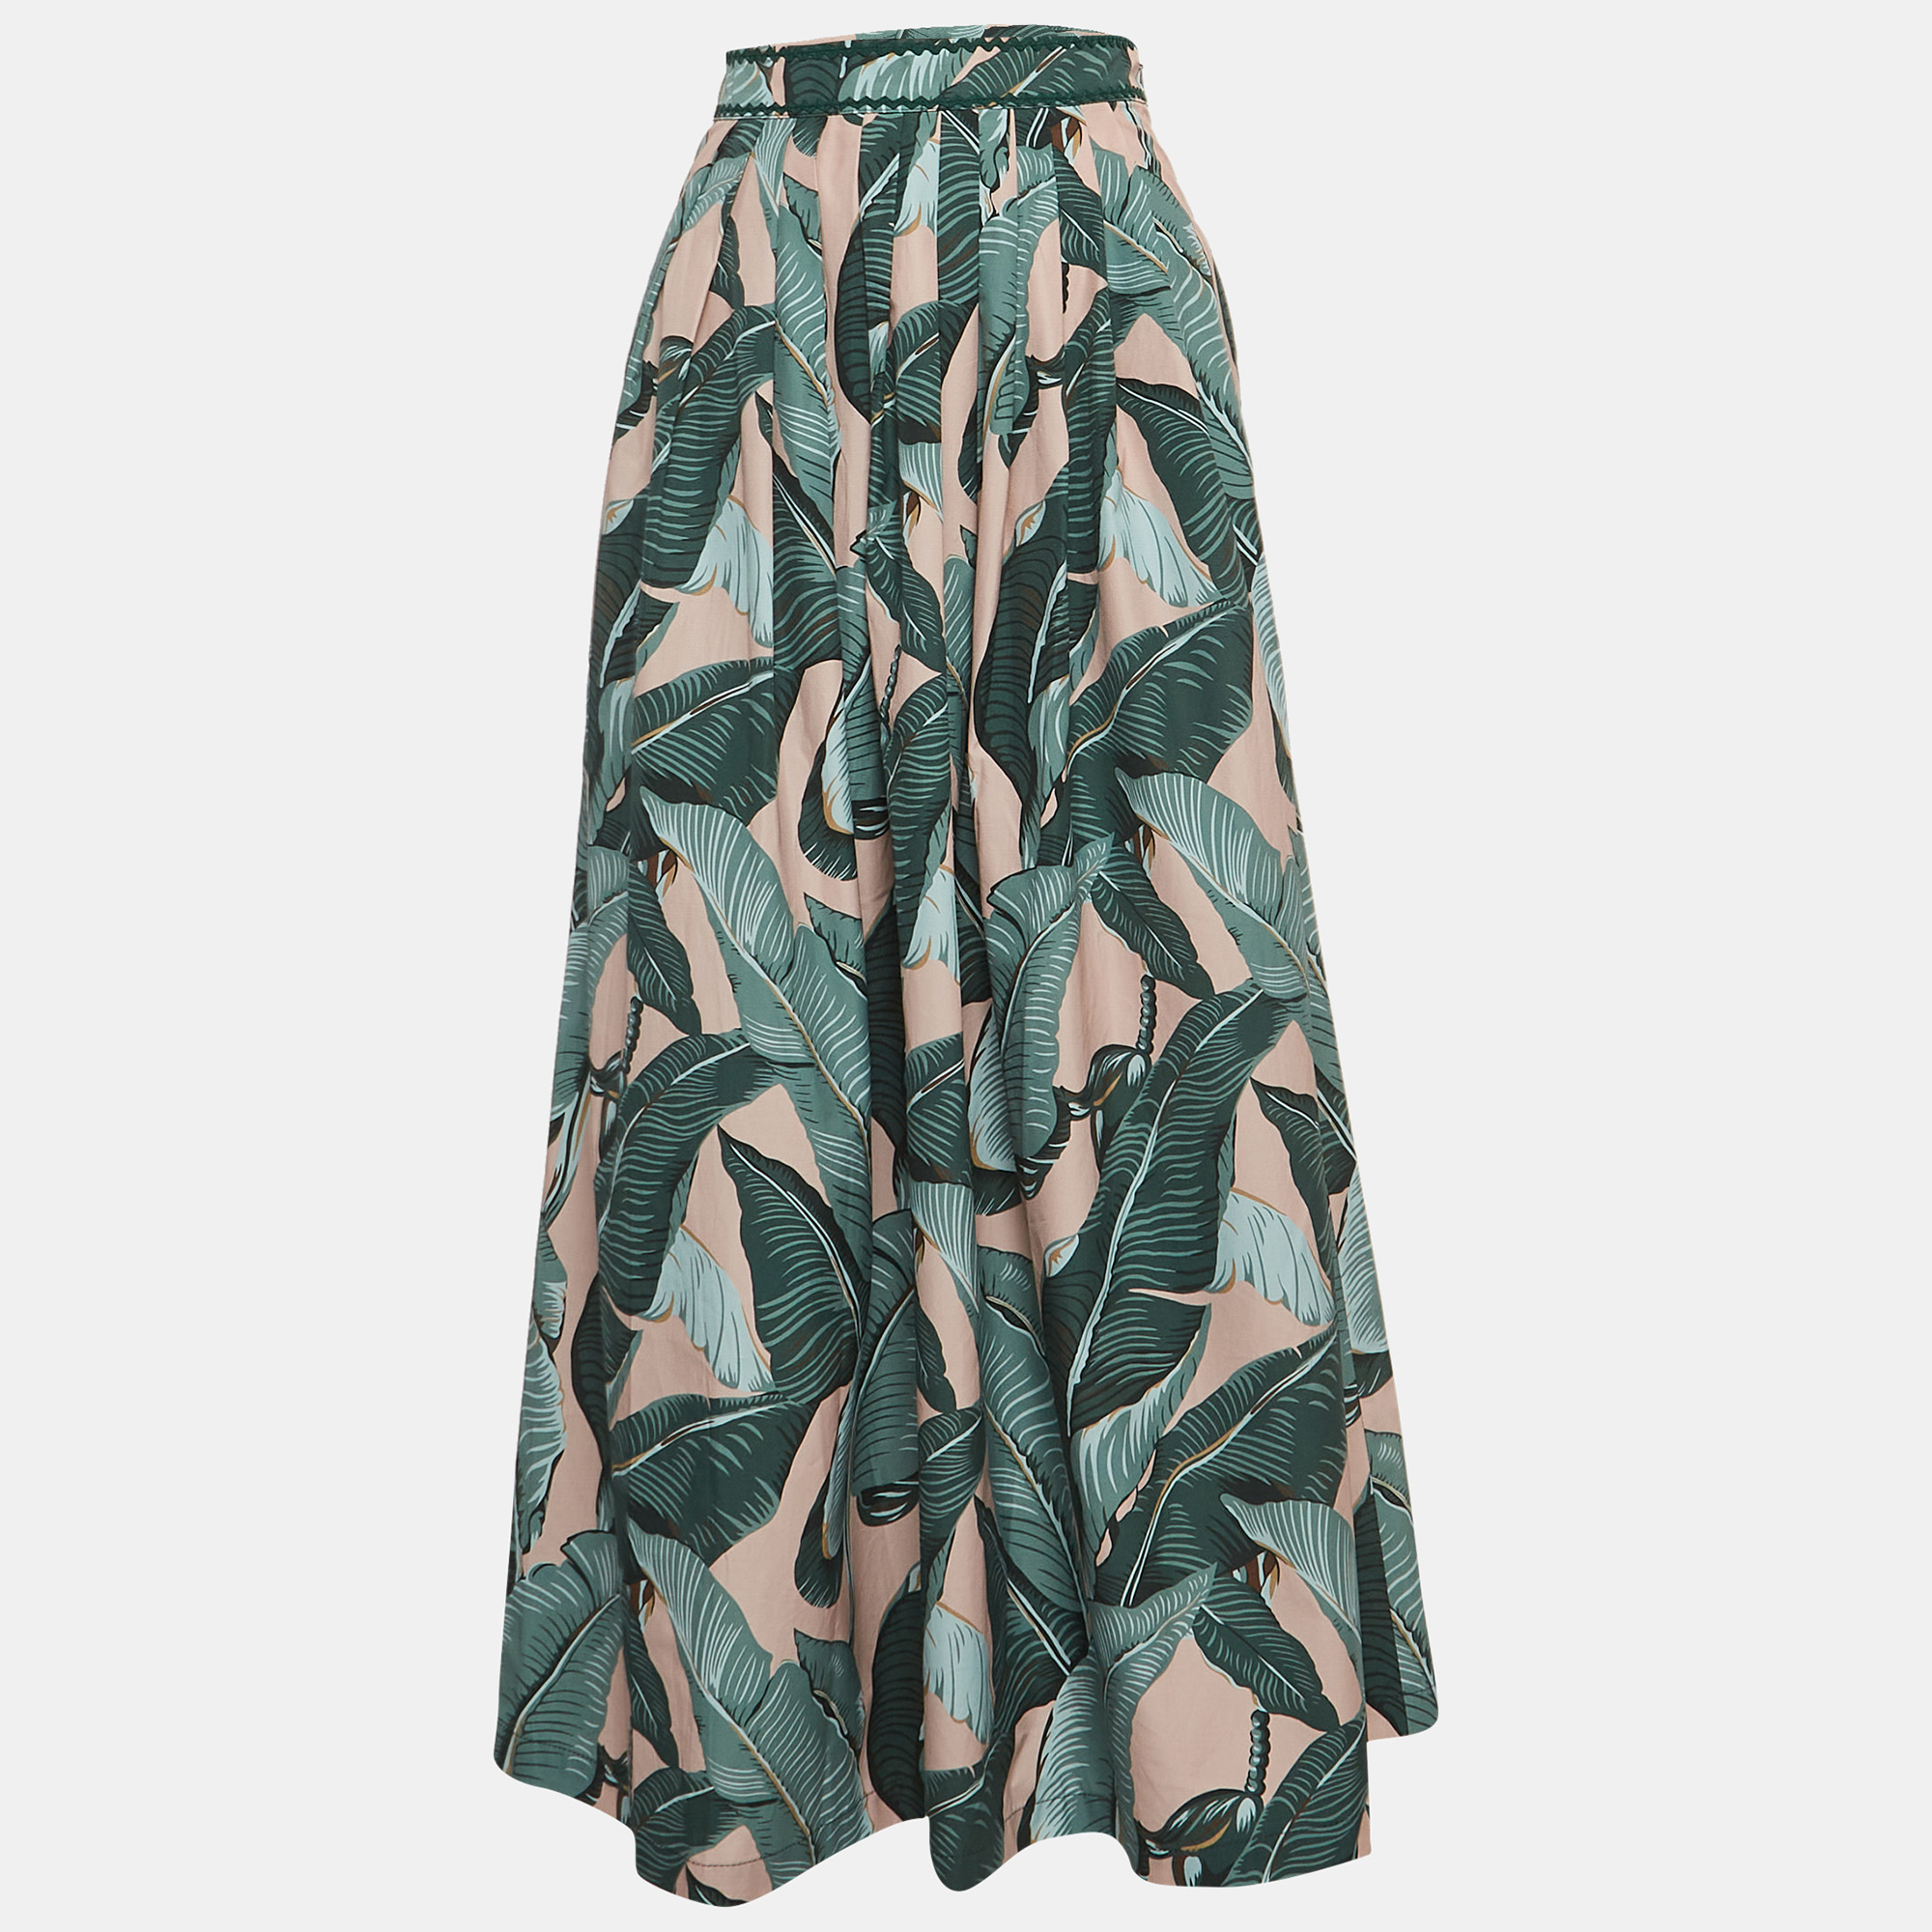 Weekend max mara green leaf printed cotton pleated eguale midi skirt s